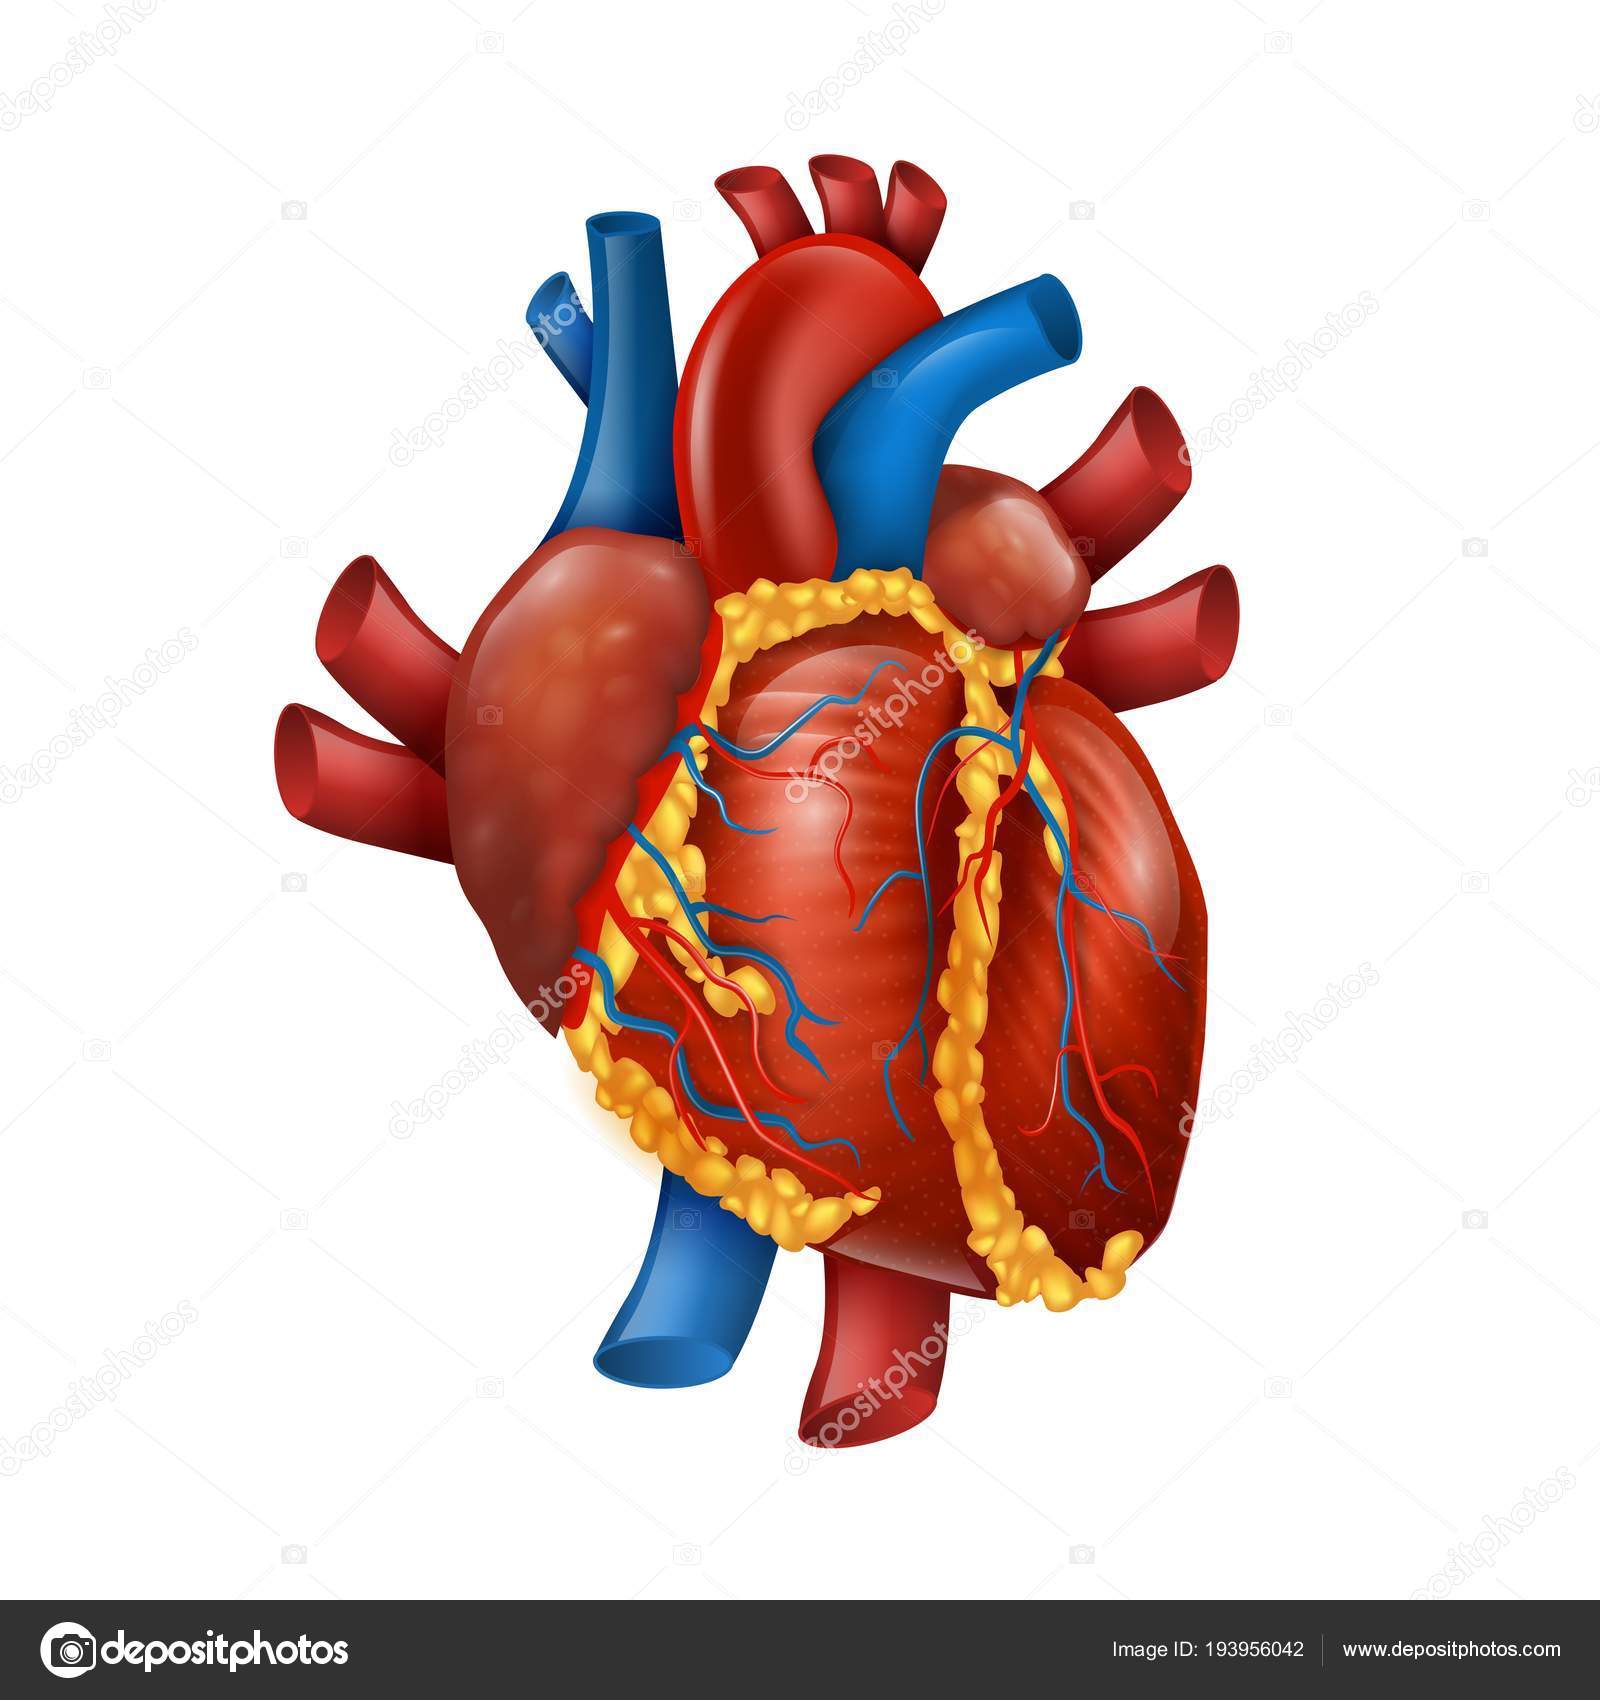 healthy human heart diagram